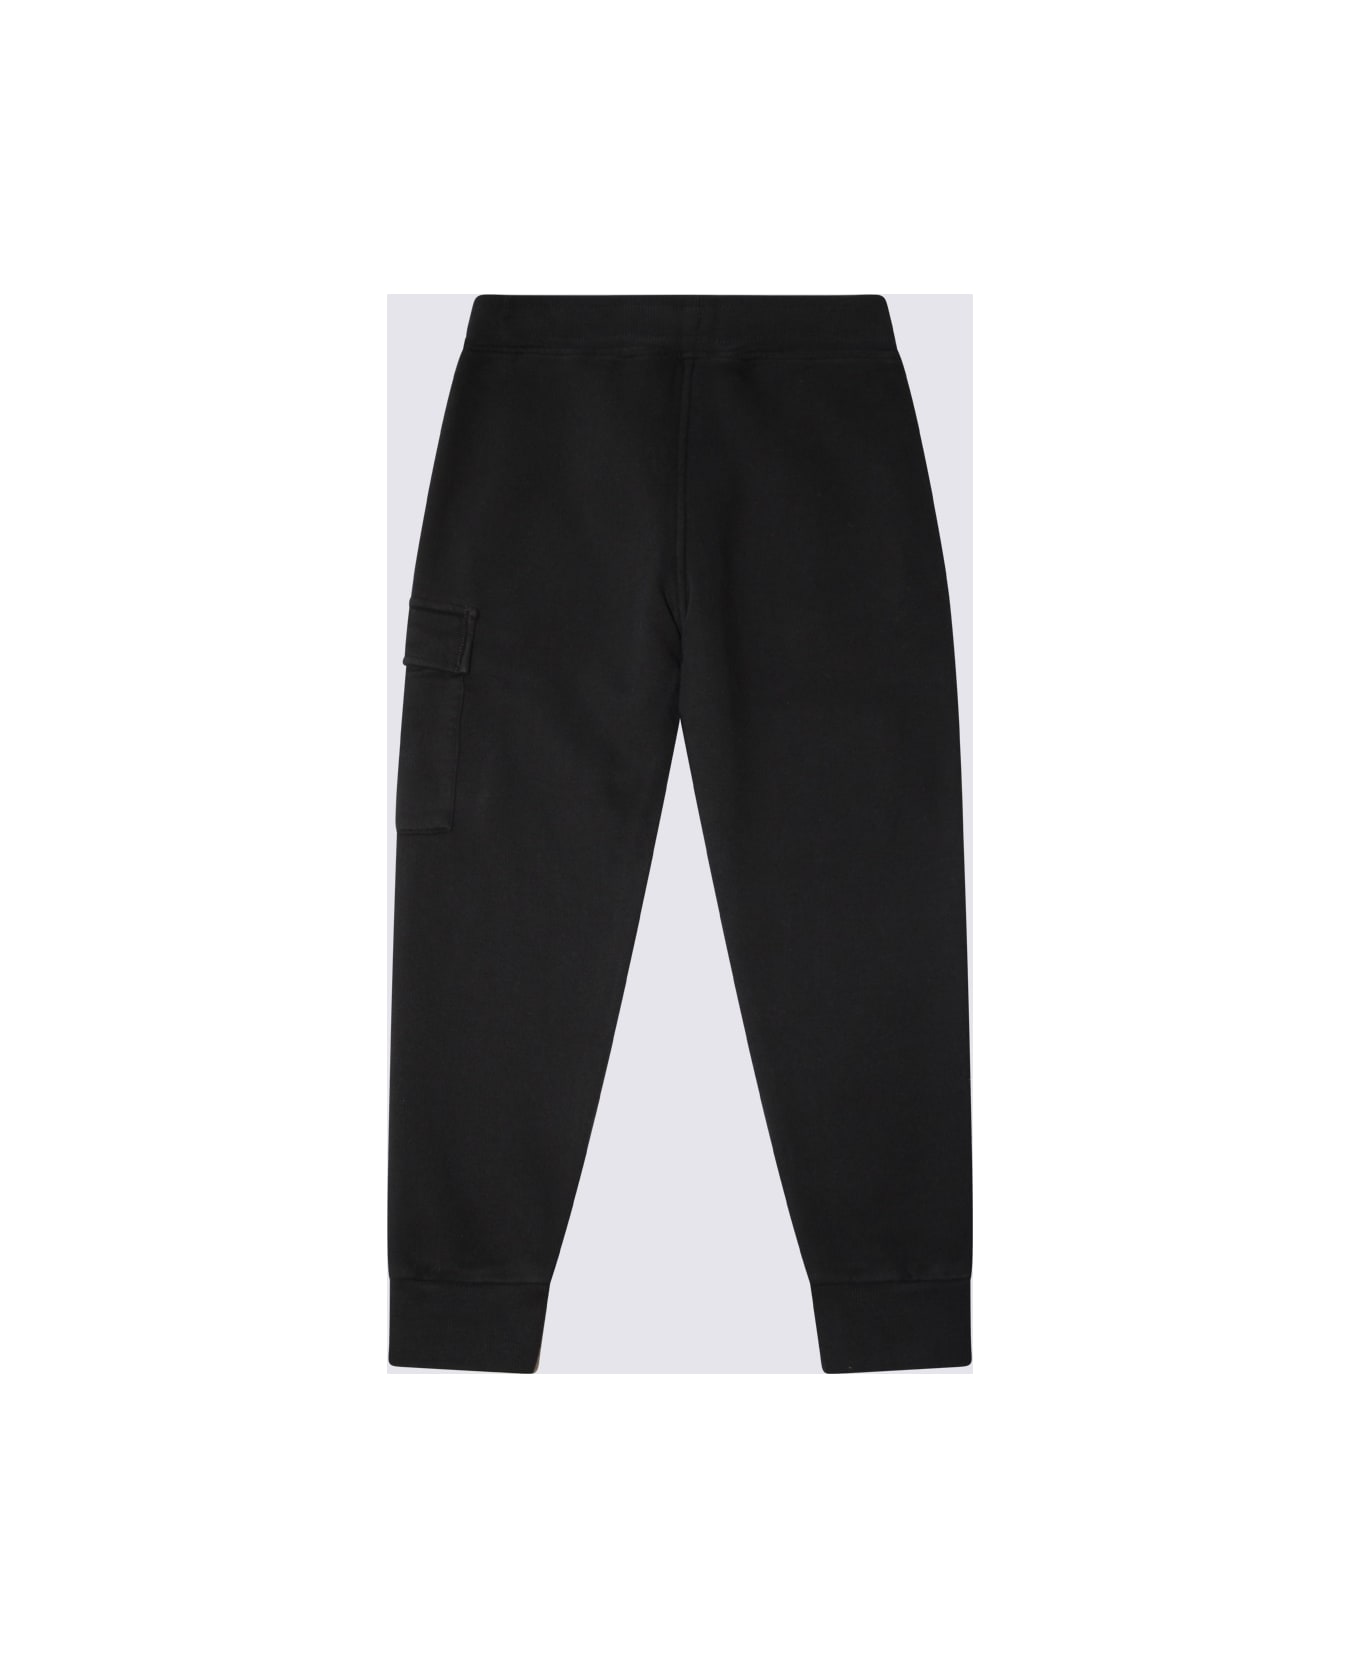 C.P. Company Black Cotton Pants - NERO/BLACK